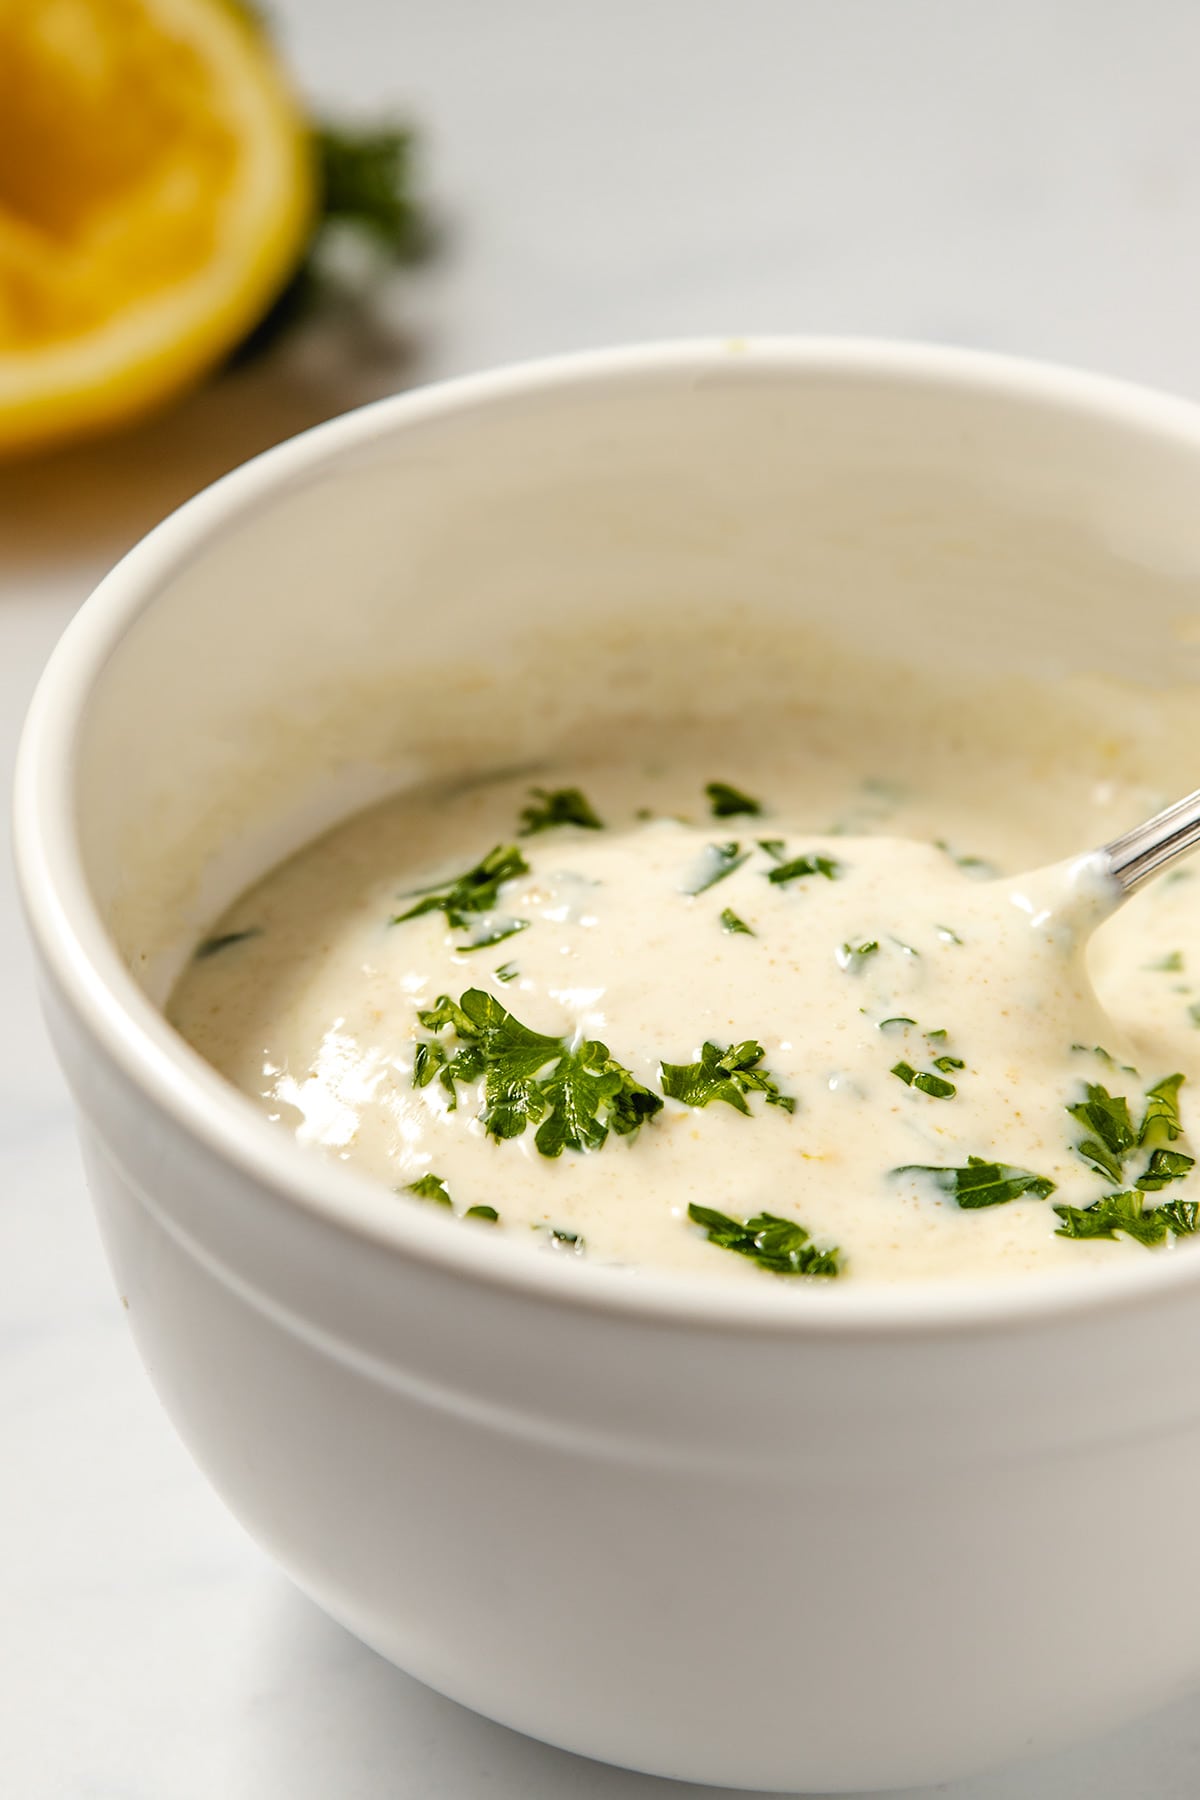 Lemon yogurt sauce garnished with parsley in a white bowl.